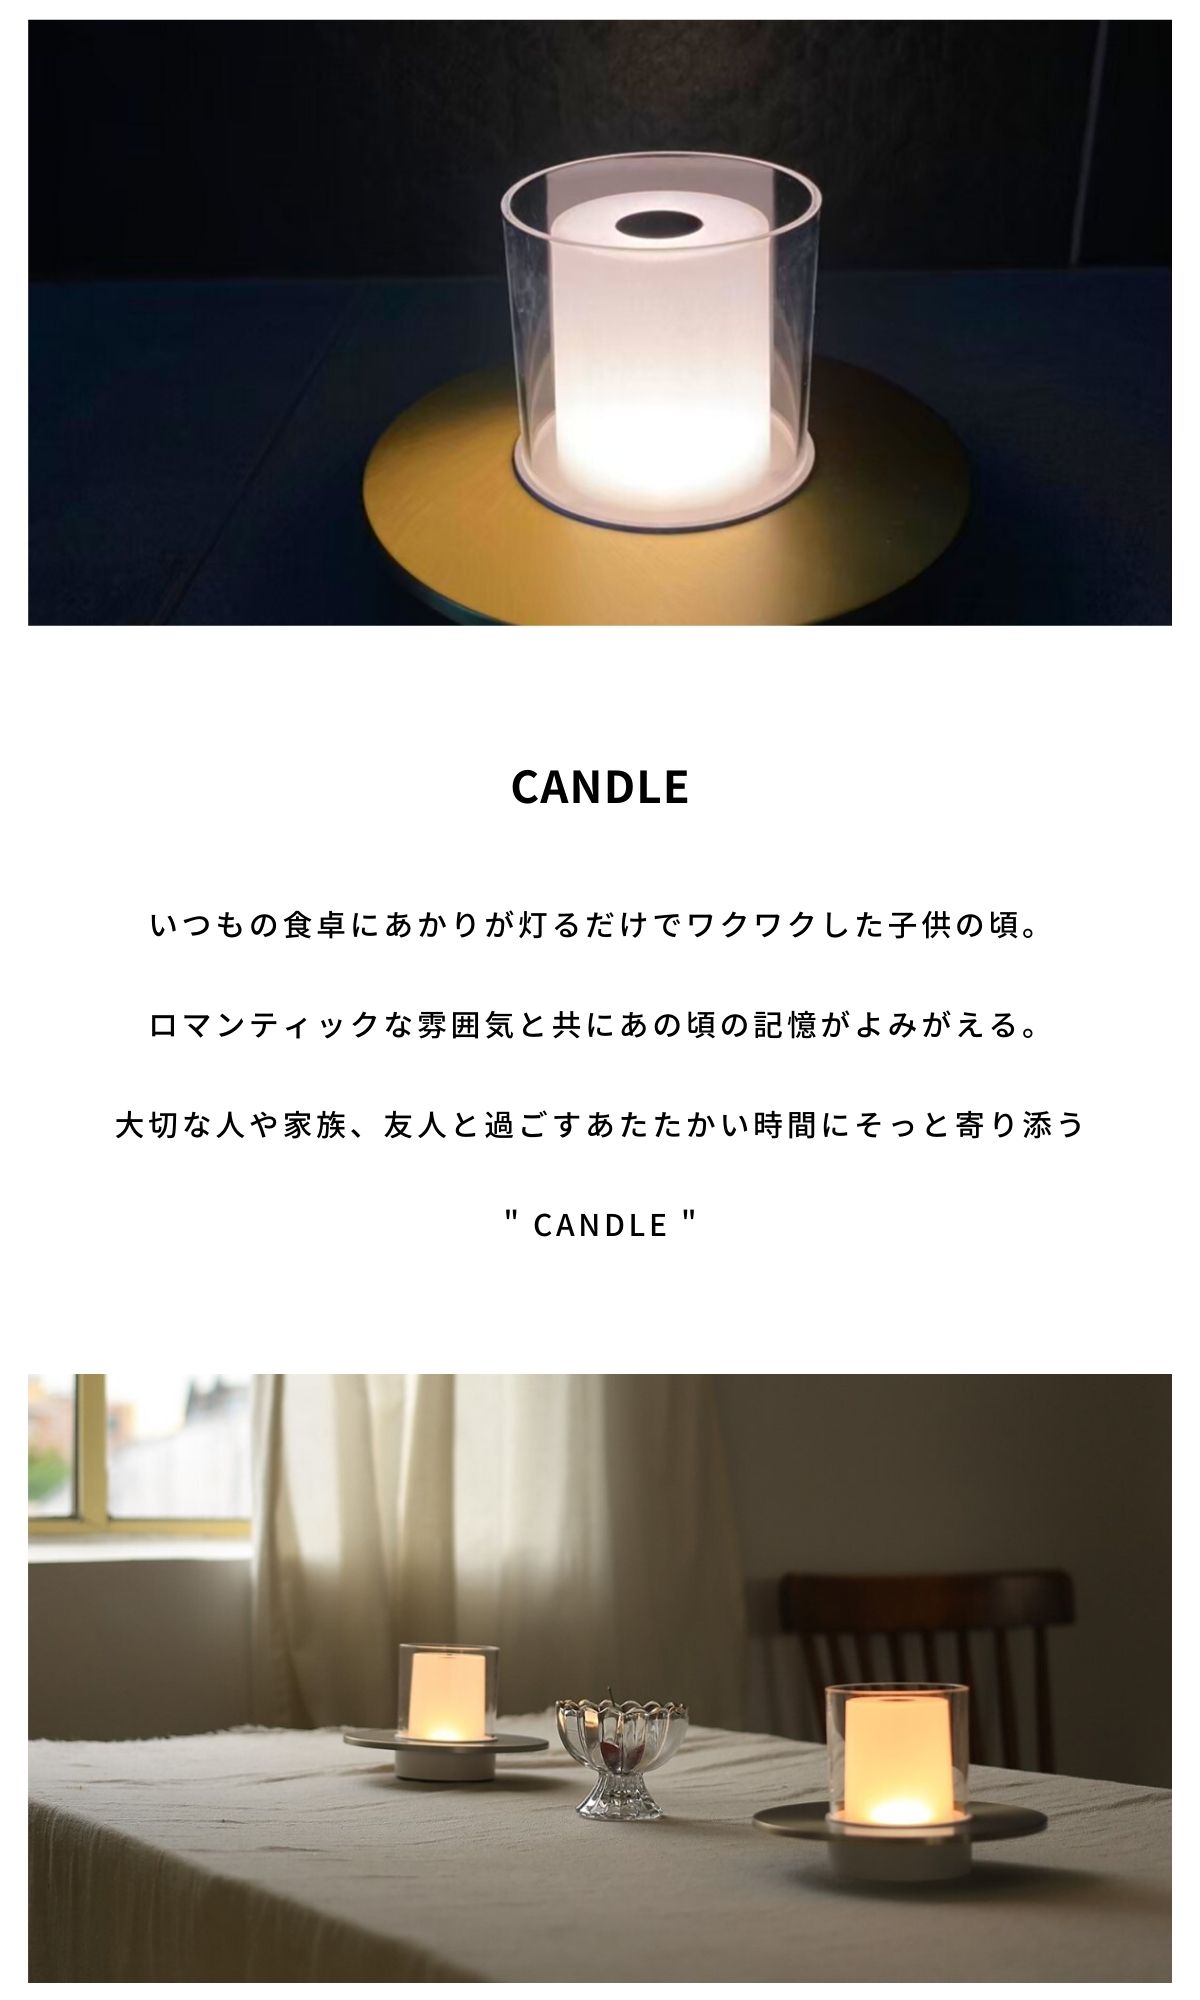 【CANDLE - LED Portable Lamp -】の商品情報詳細